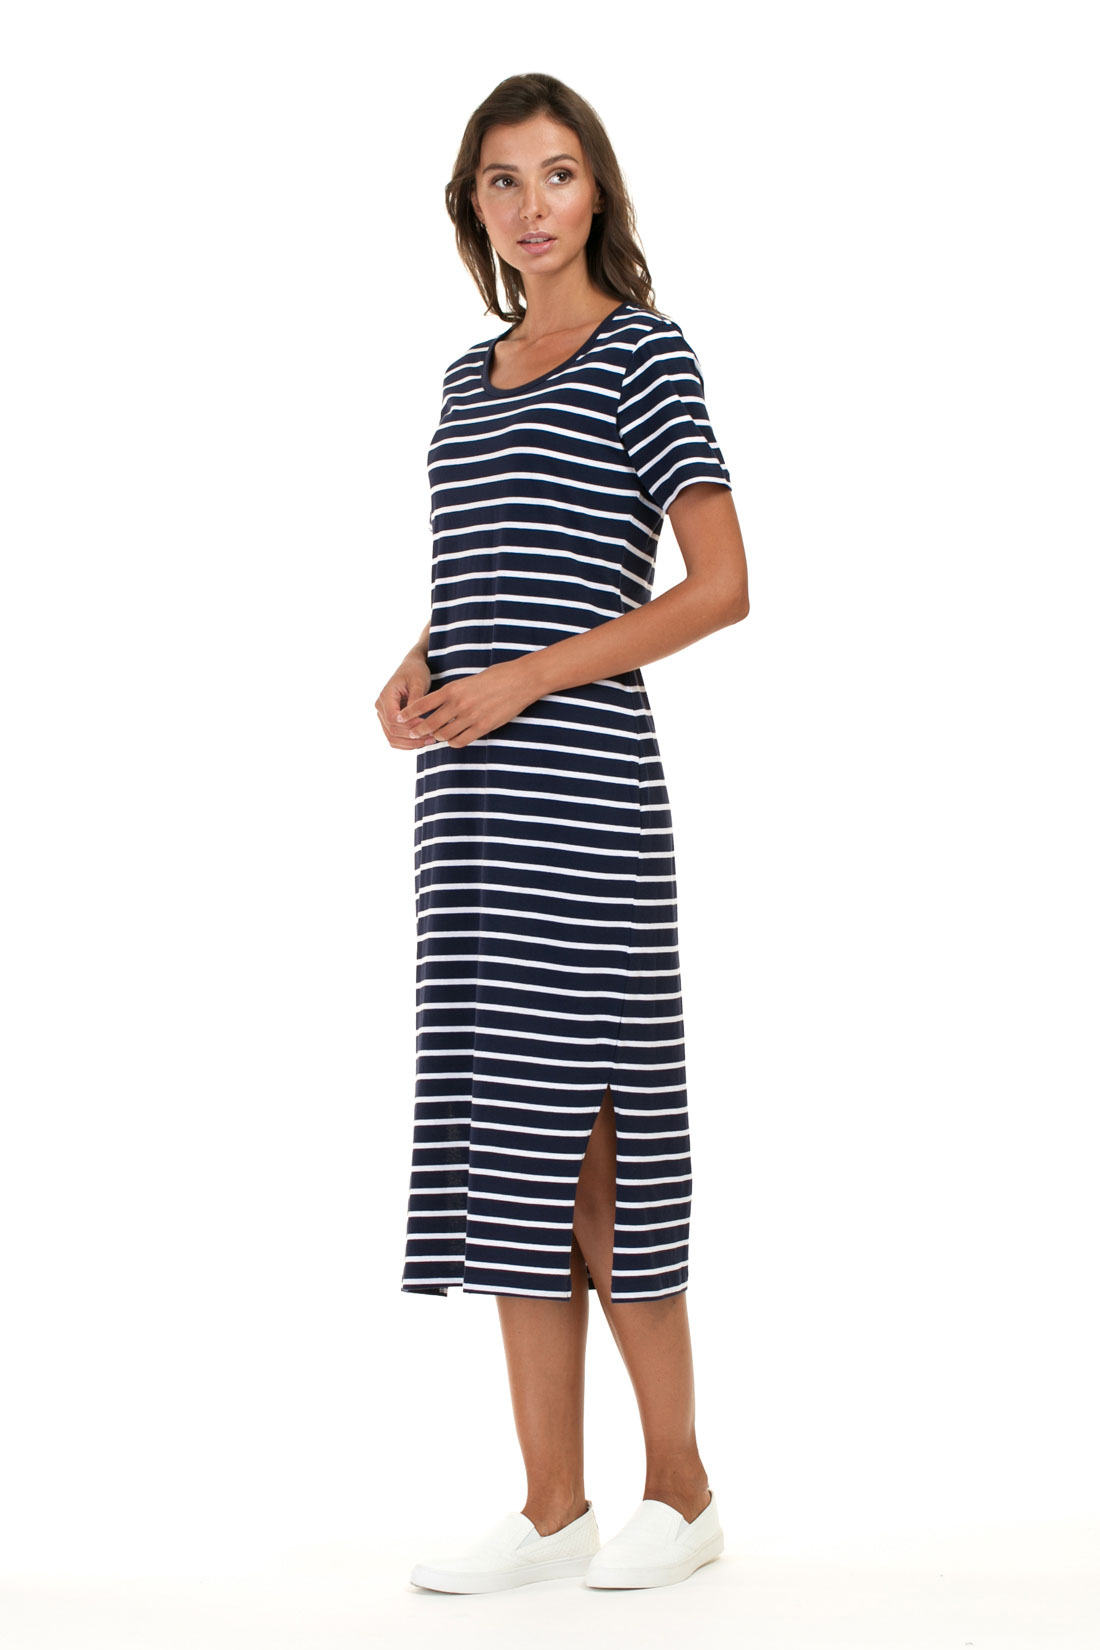 Платье-миди в морскую полоску (арт. baon B457099), размер XXL, цвет dark navy striped#синий Платье-миди в морскую полоску (арт. baon B457099) - фото 1